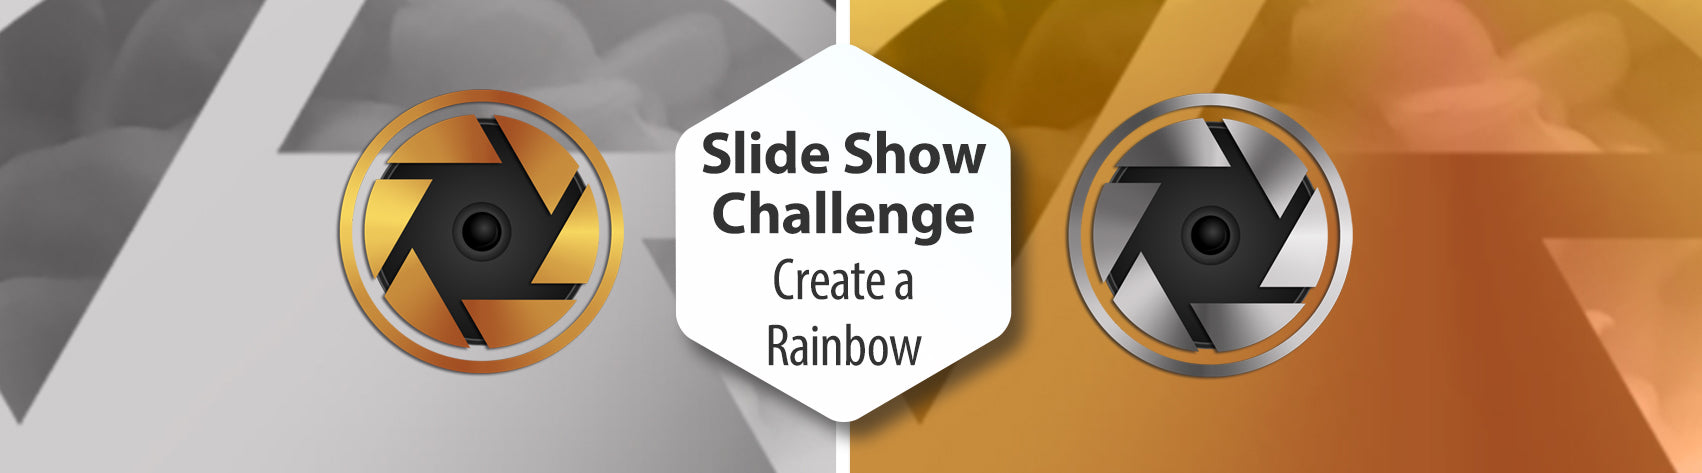 Slide Show Challenge - Create a Rainbow